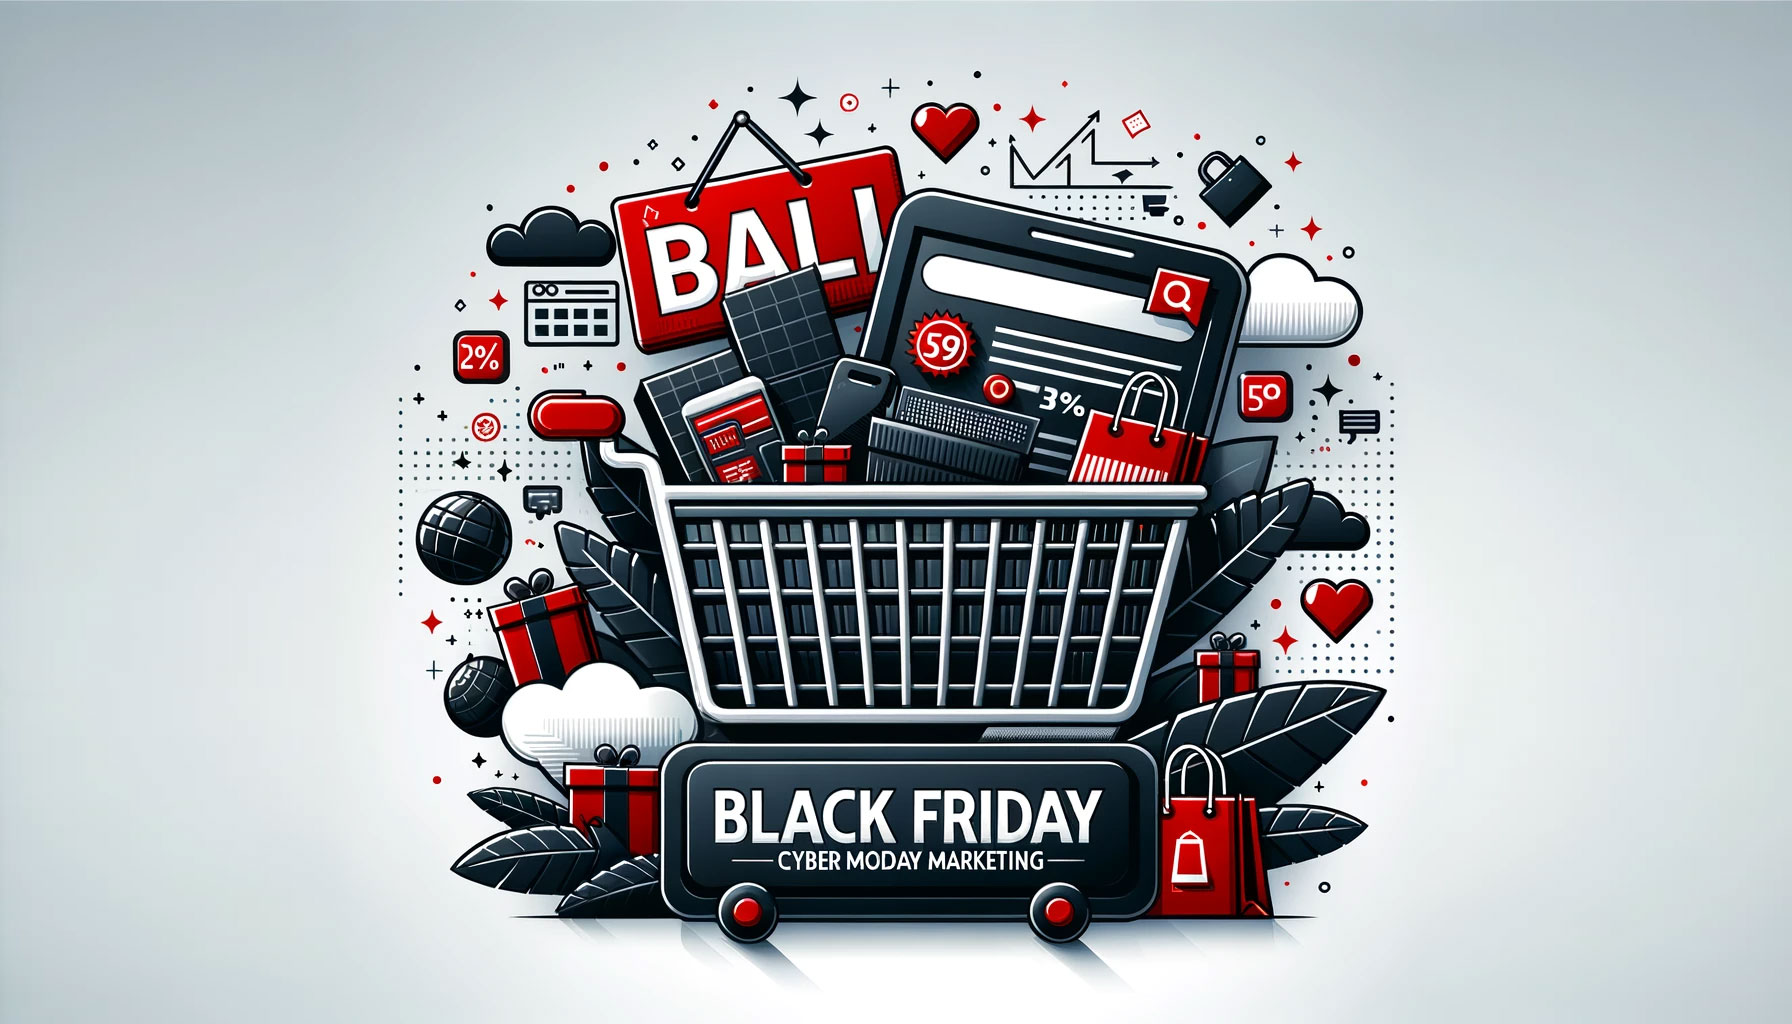 Black Friday/Cyber Monday Marketing
